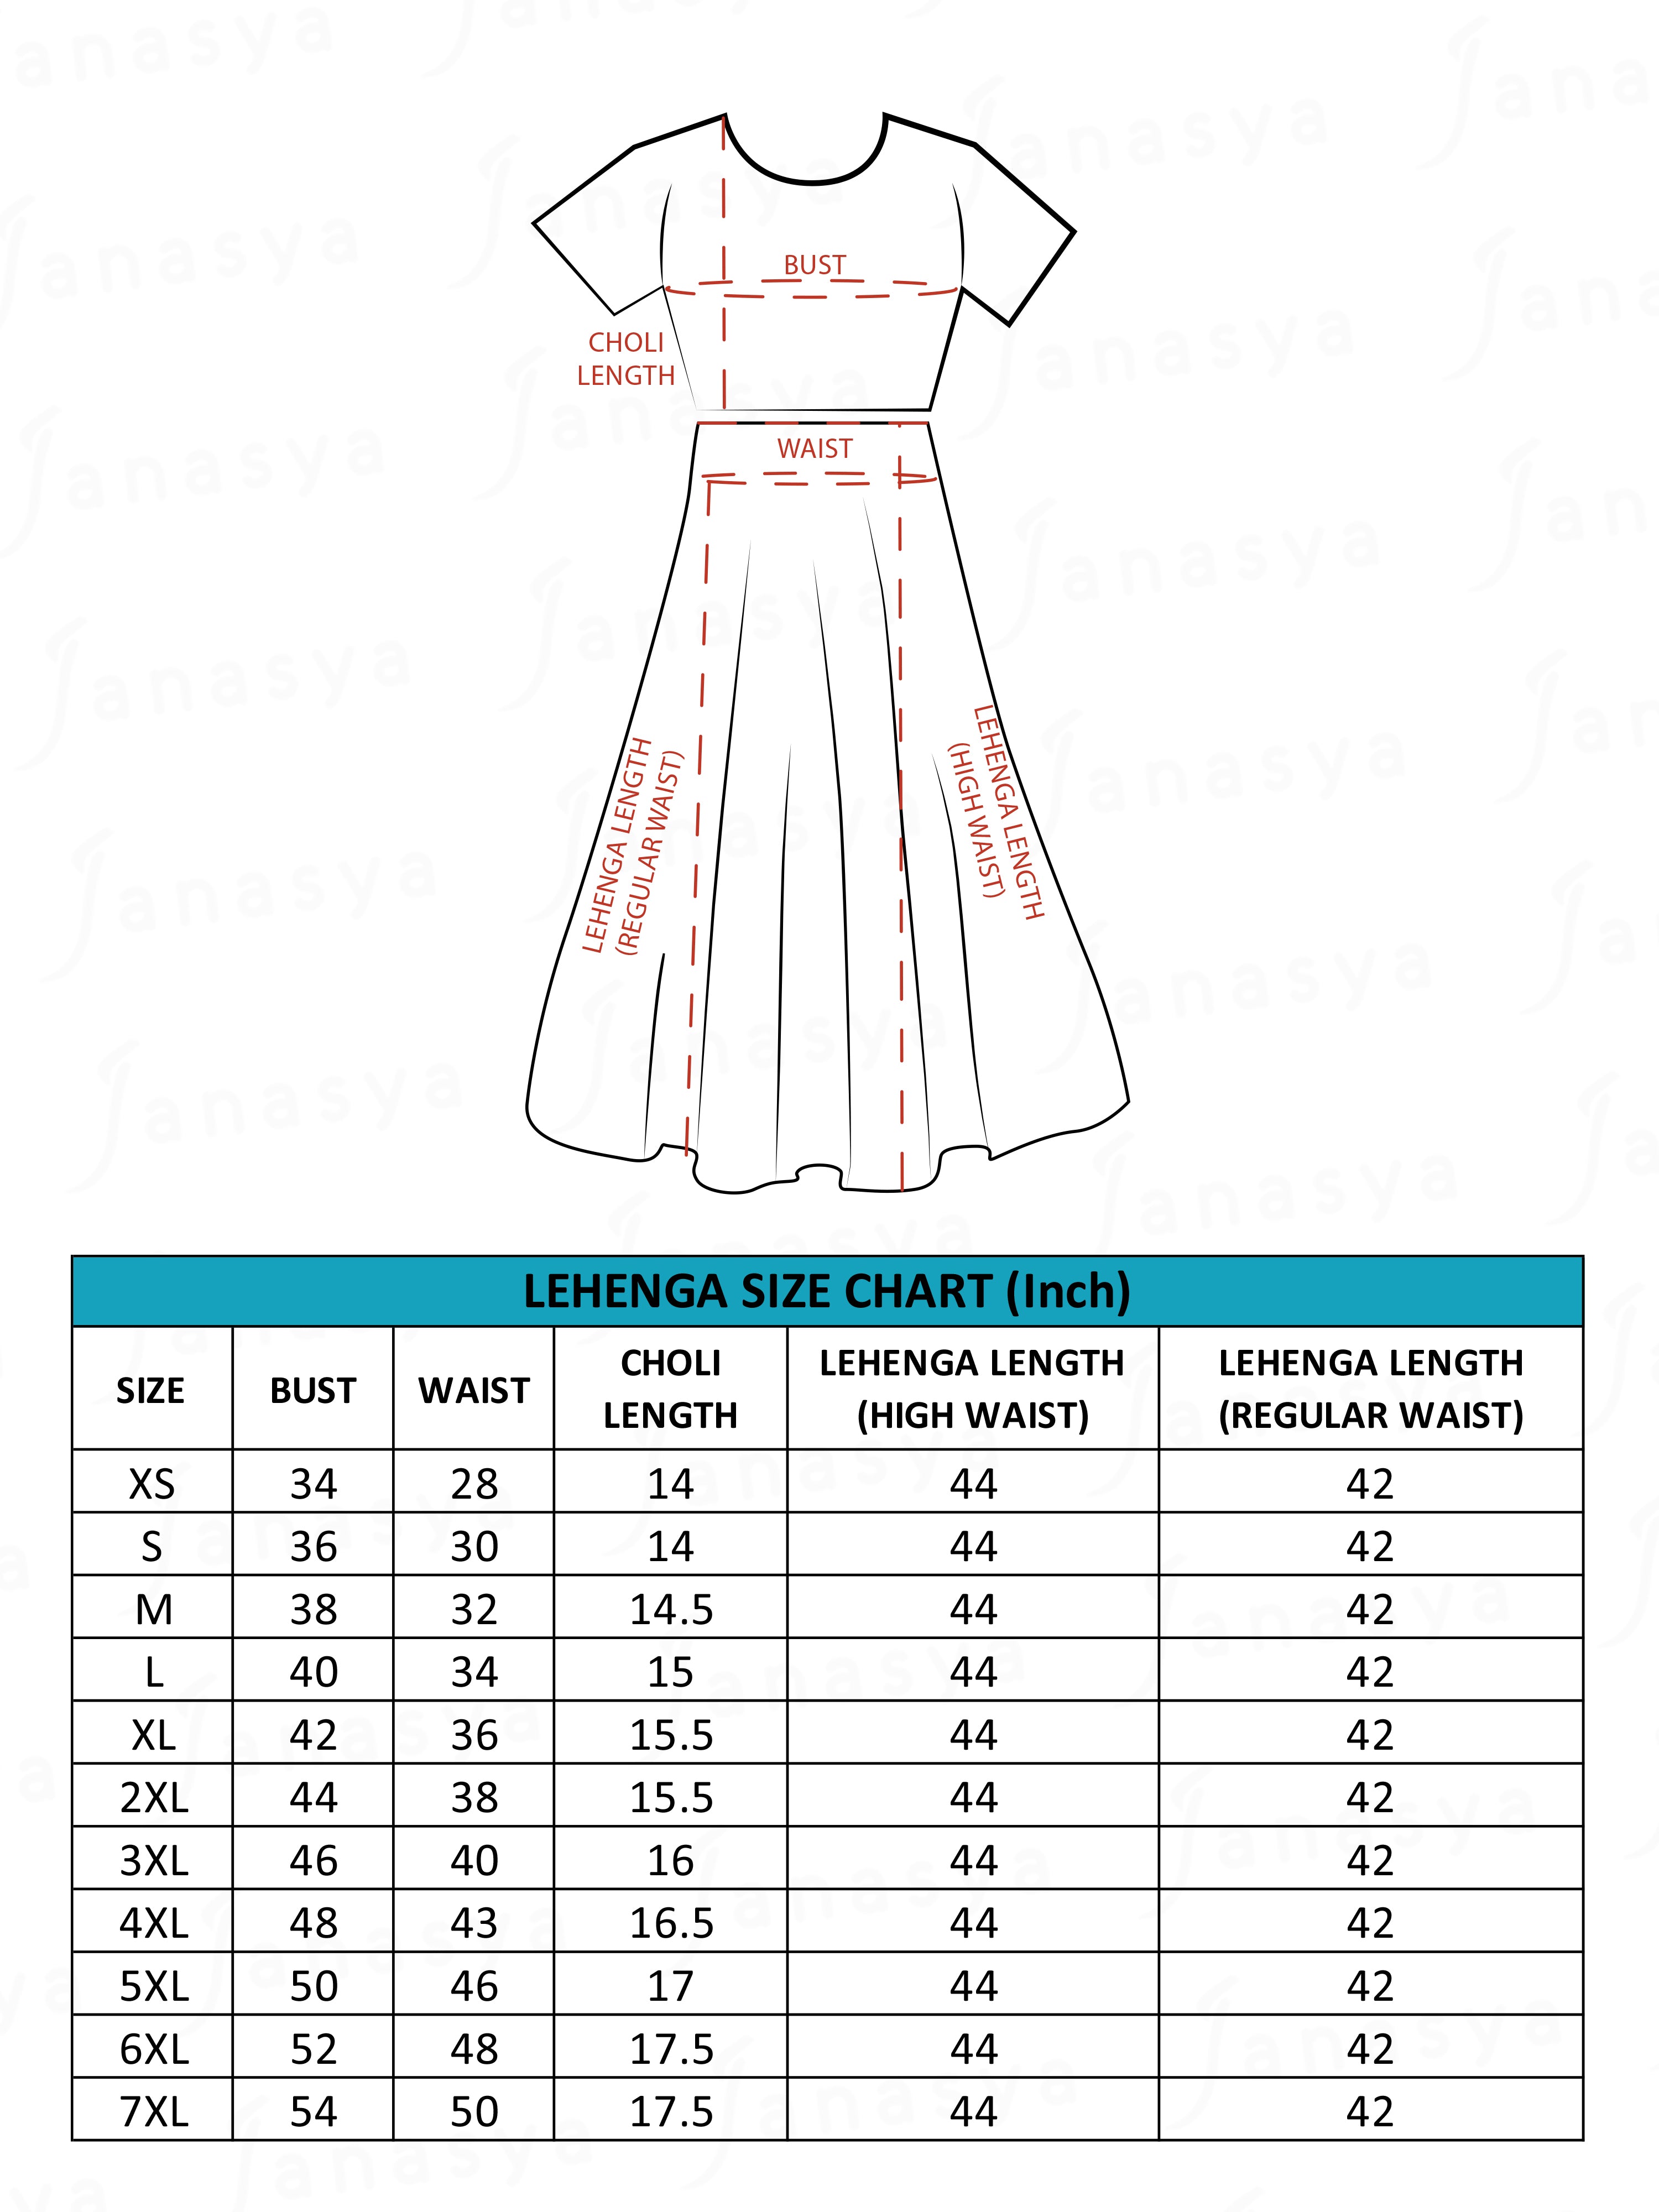 South Indian Style Half Saree JEQUARD LEHENGA CHOLI Un Stitched (Lehenga  Waist Size: 46 in, Lehenga Length Size: 44 in, Duppatta Length Size: 2.5 in)